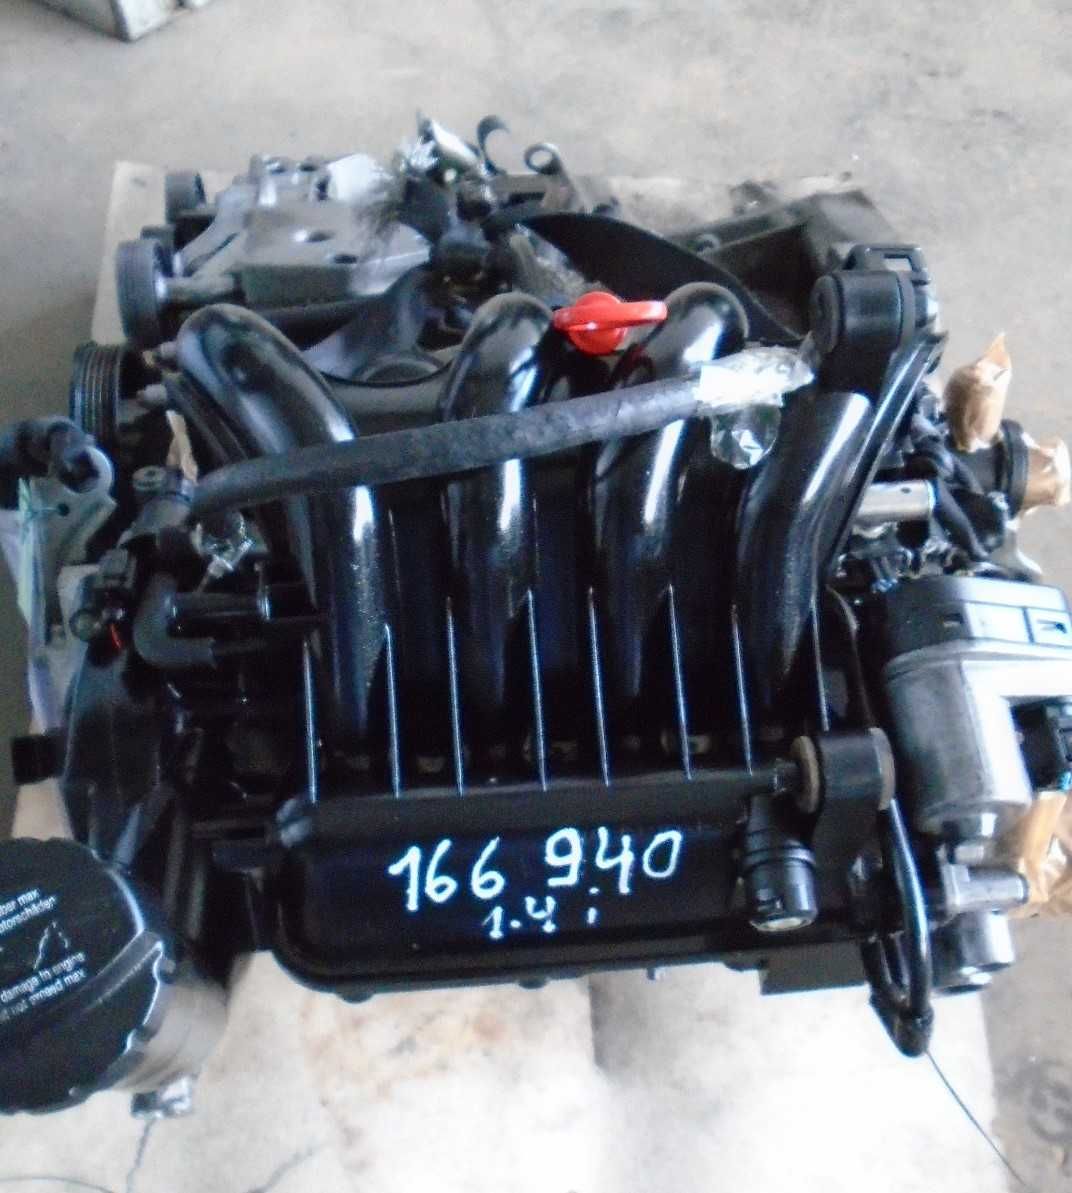 Motor Class A 1.4 gasolina 1998 Ref:166 940 m333